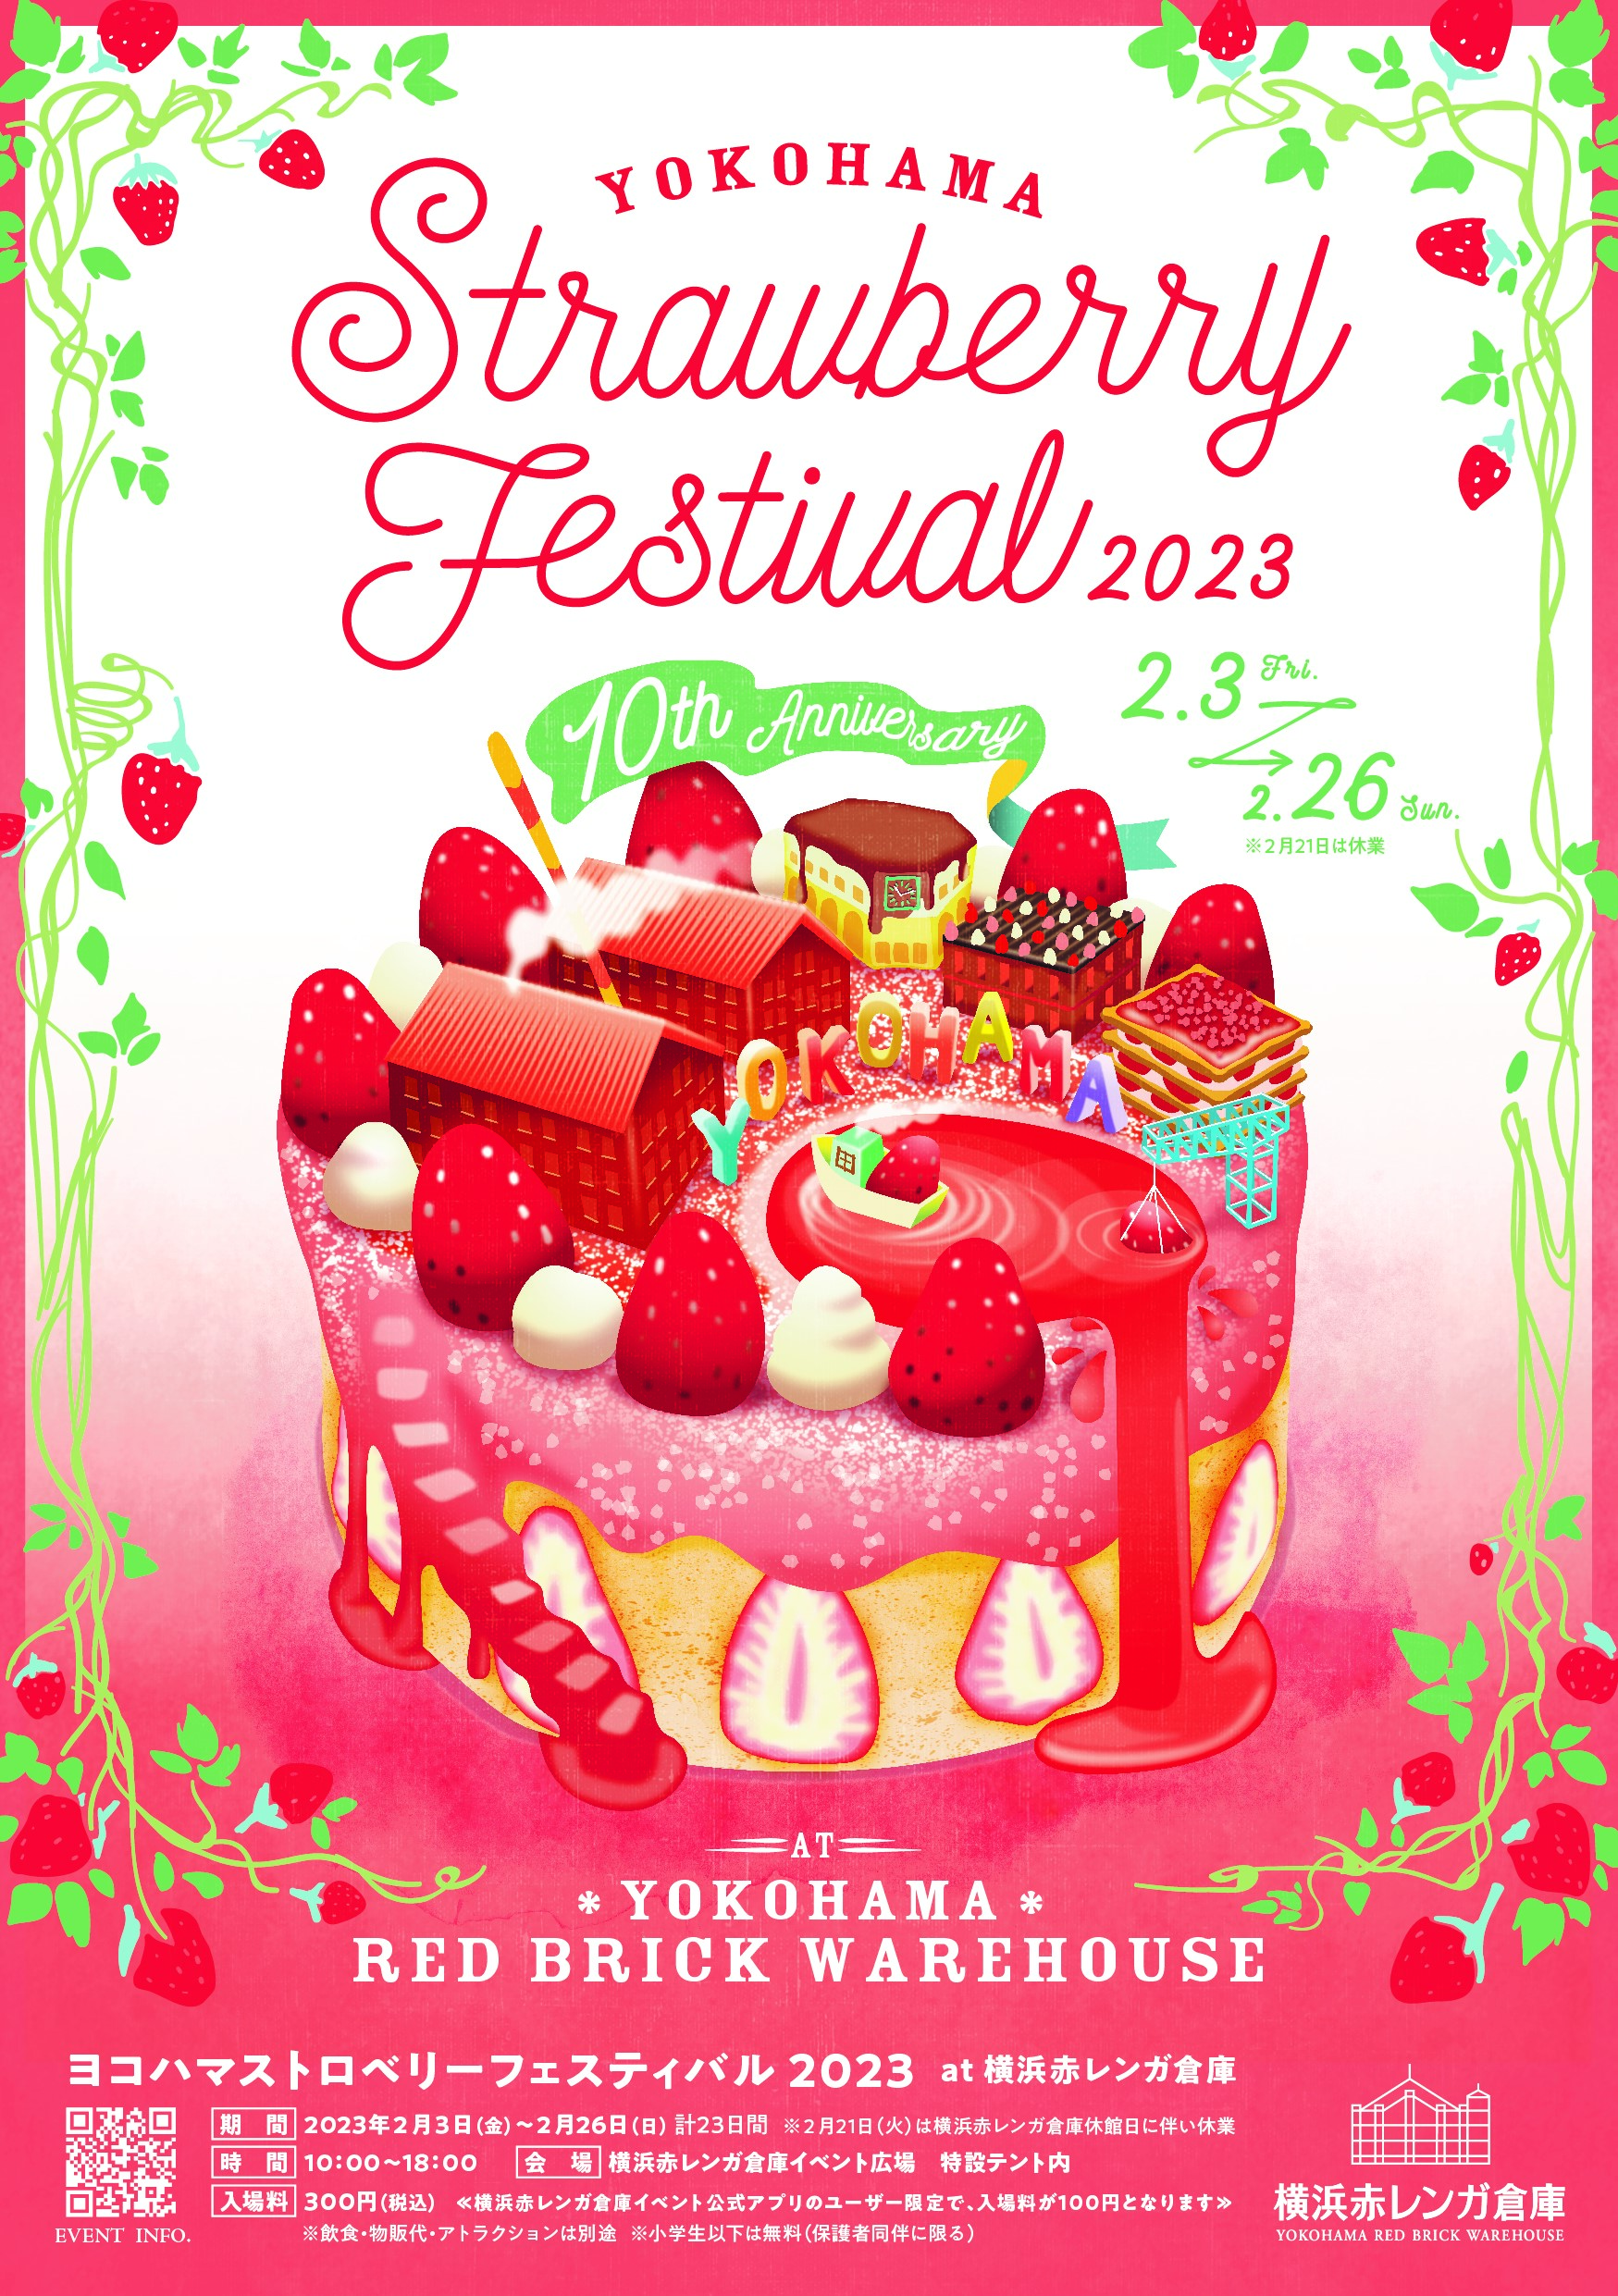 YOKOHAMA STRAWBERRY FESTIVAL 2023